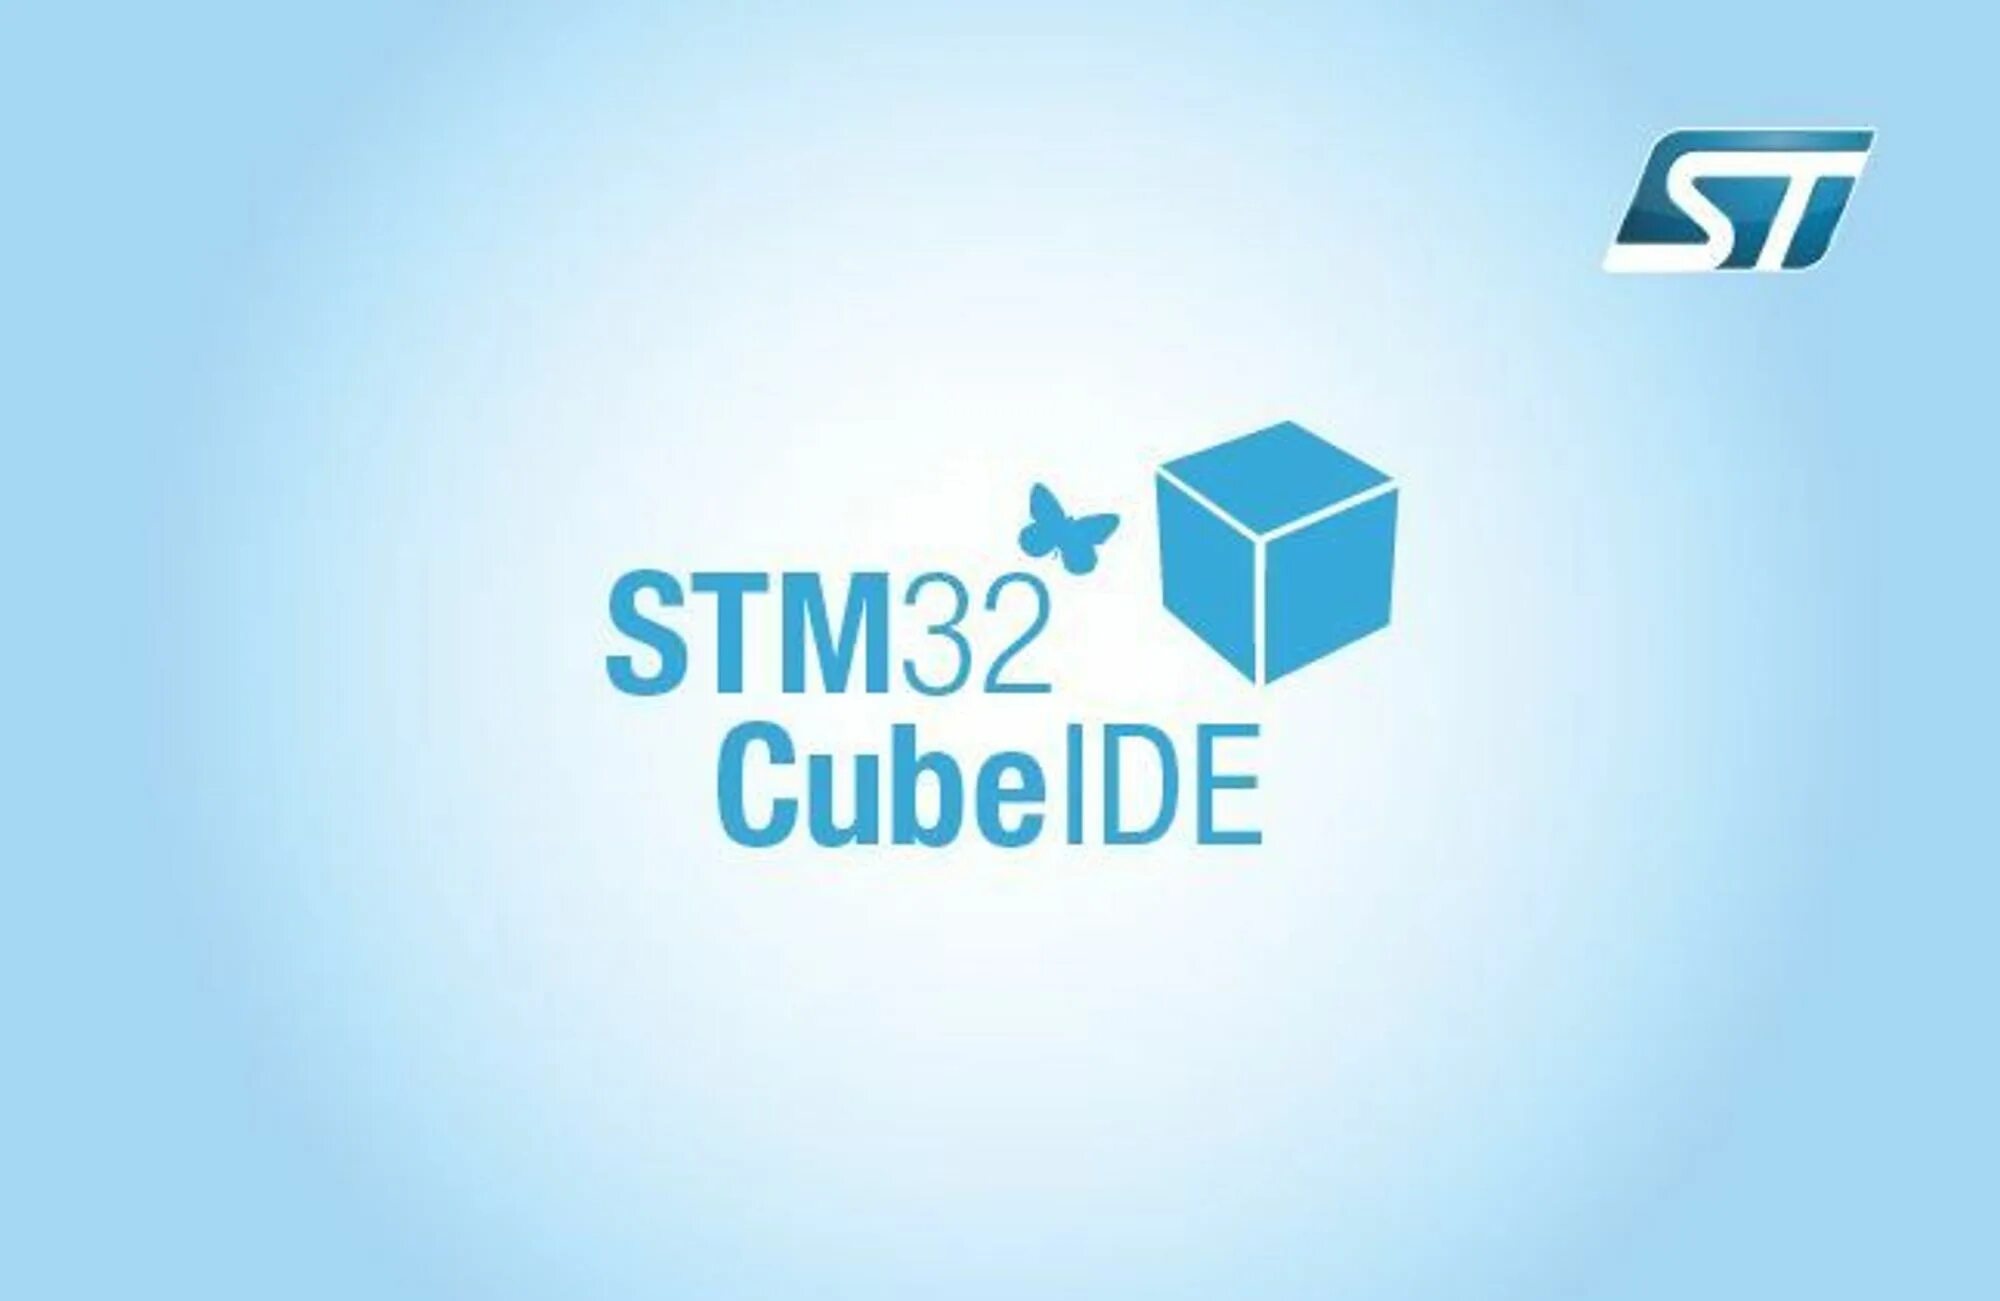 Stm32cubemx ide. Cube MX stm32. Stm32 Cube ide. Stm32cubeide stm32cubemx.